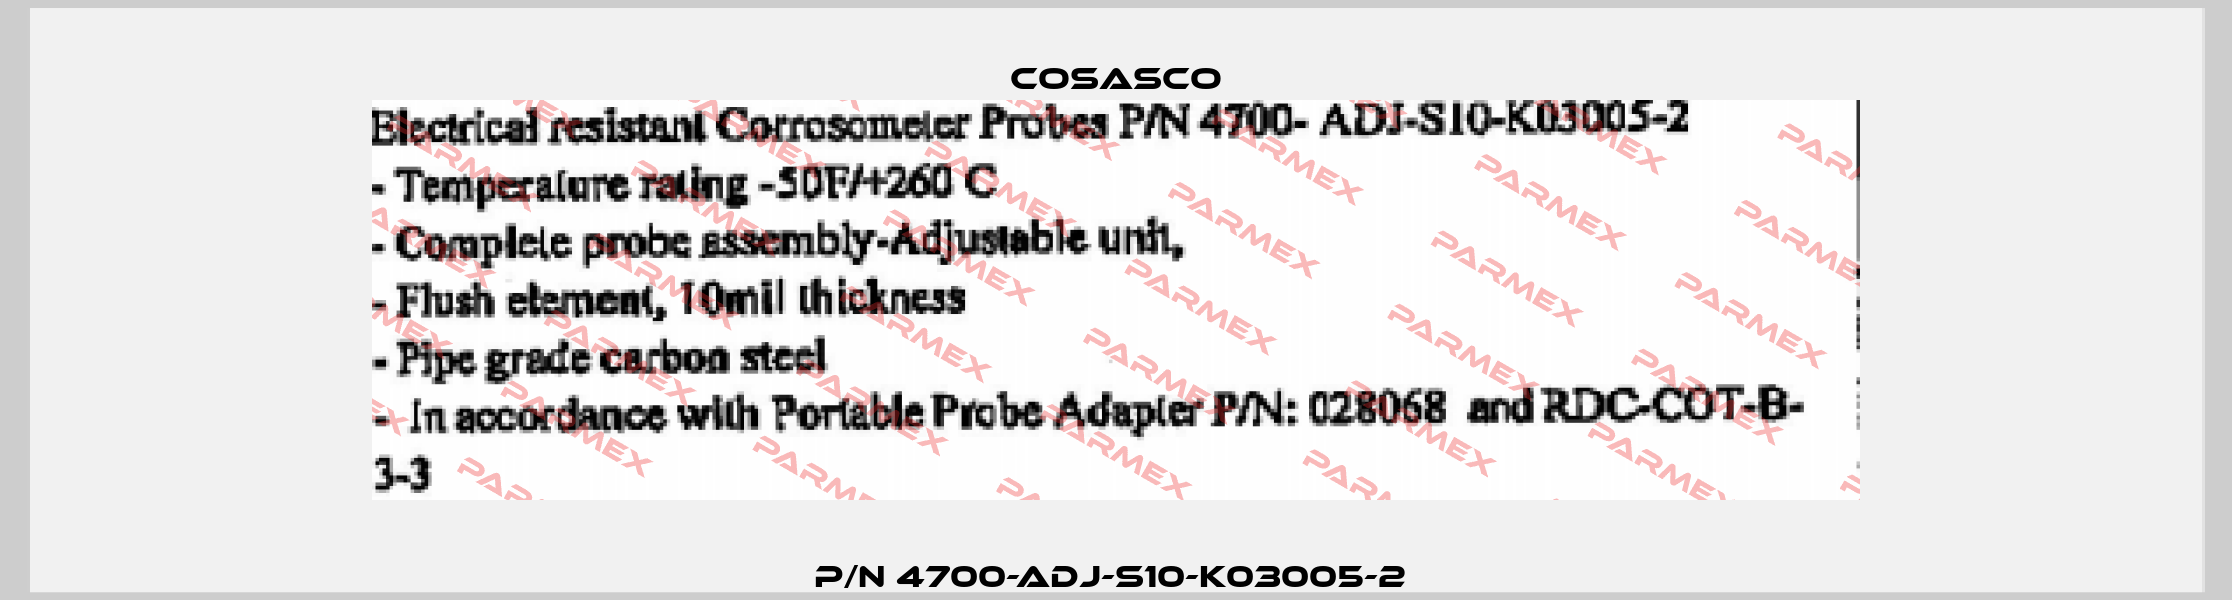 P/N 4700-ADJ-S10-K03005-2  Cosasco